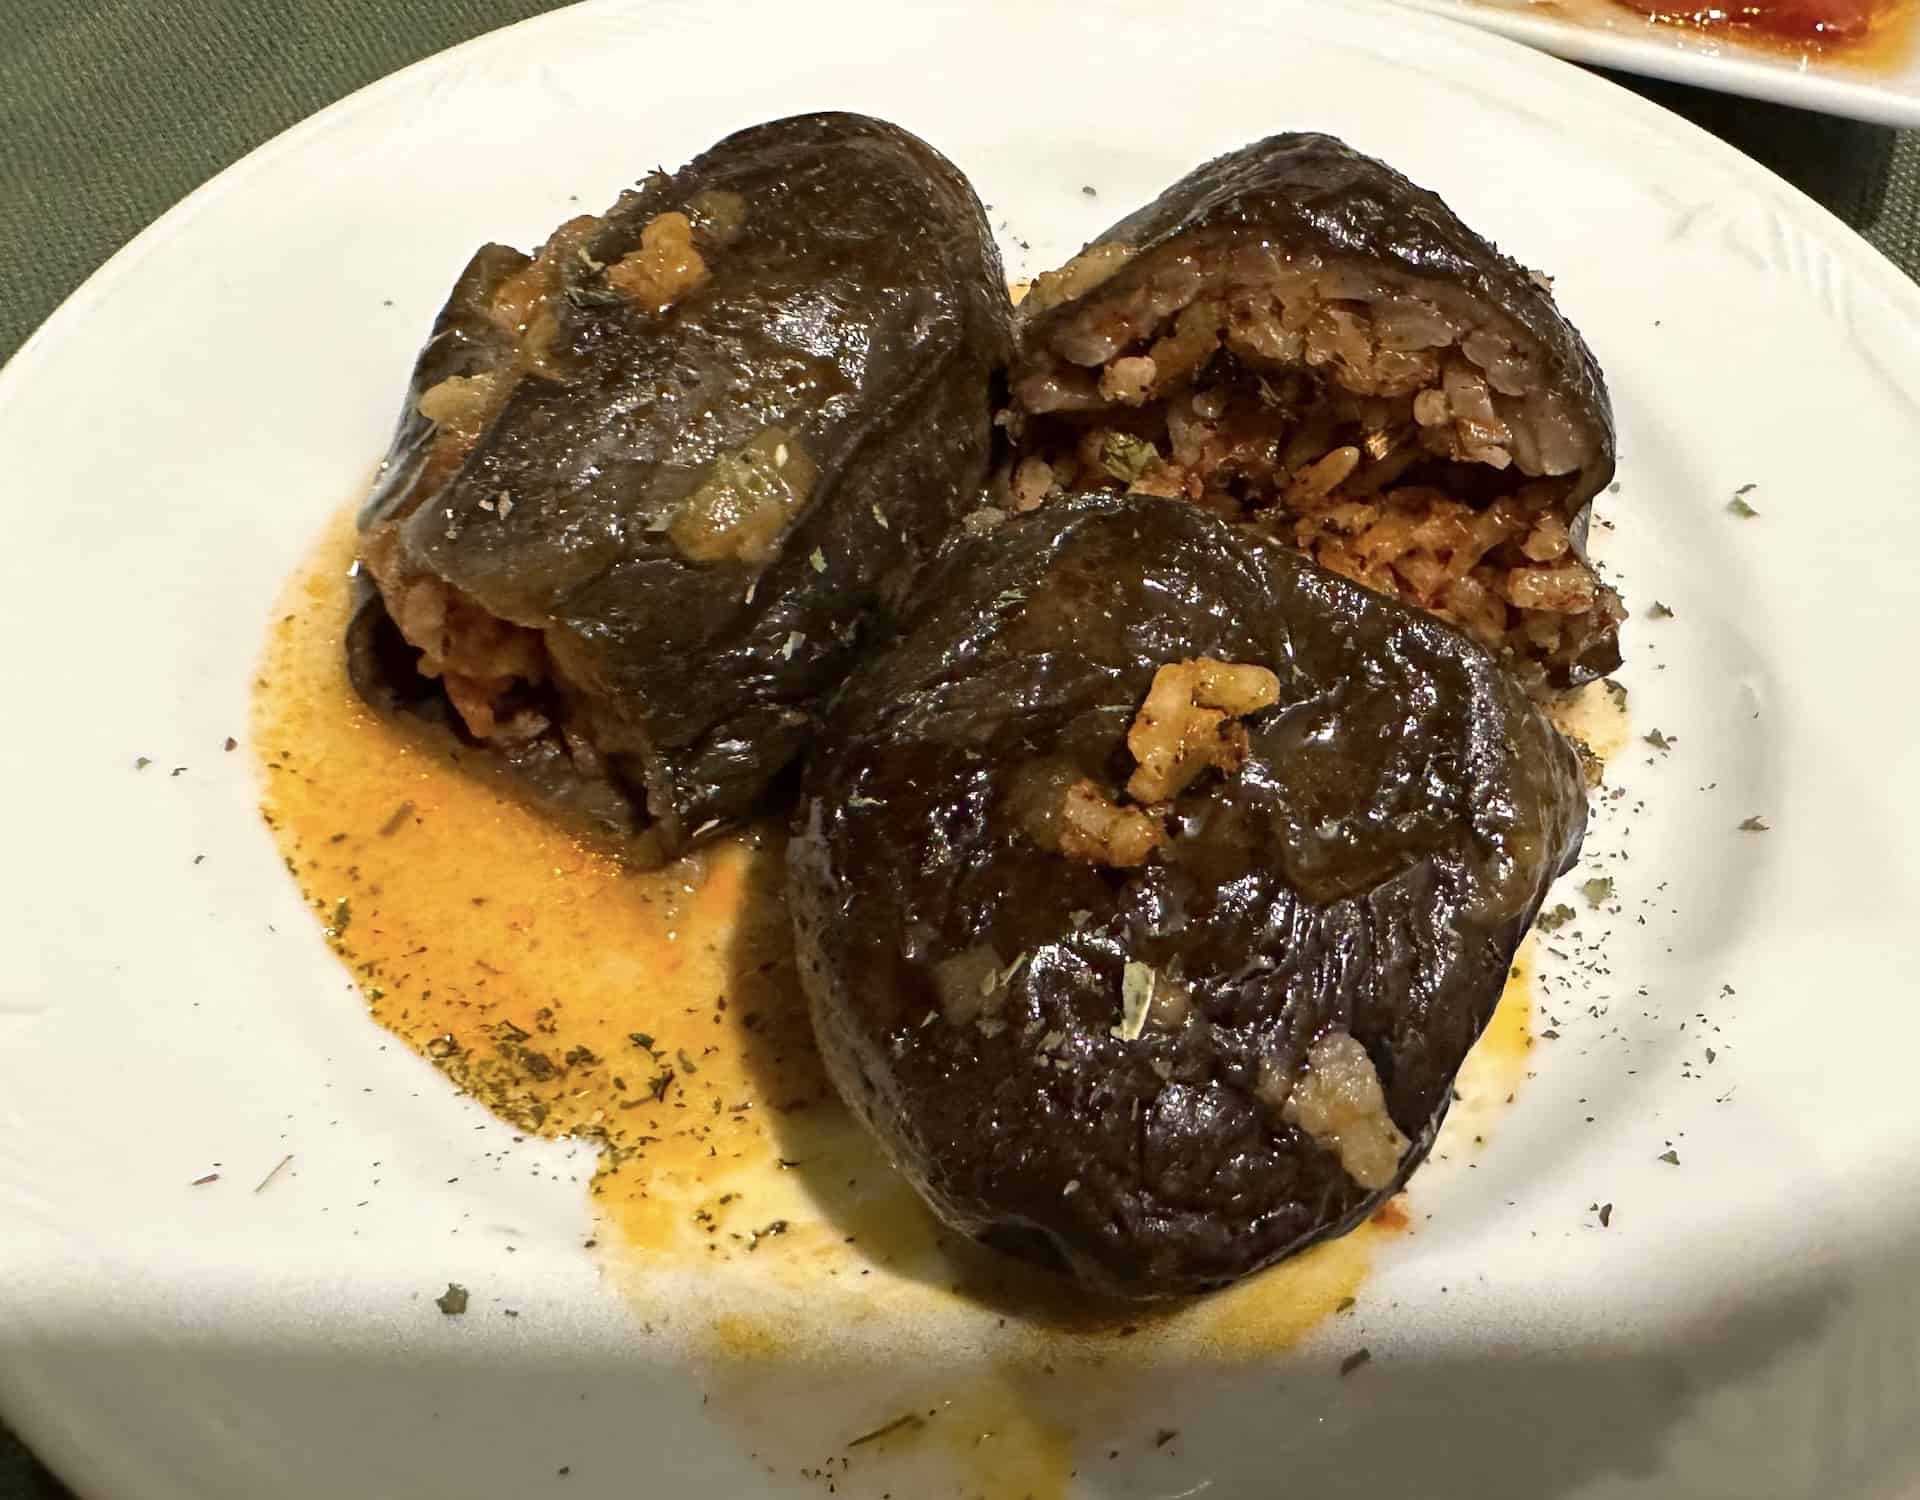 Stuffed eggplant at Old House Restaurant